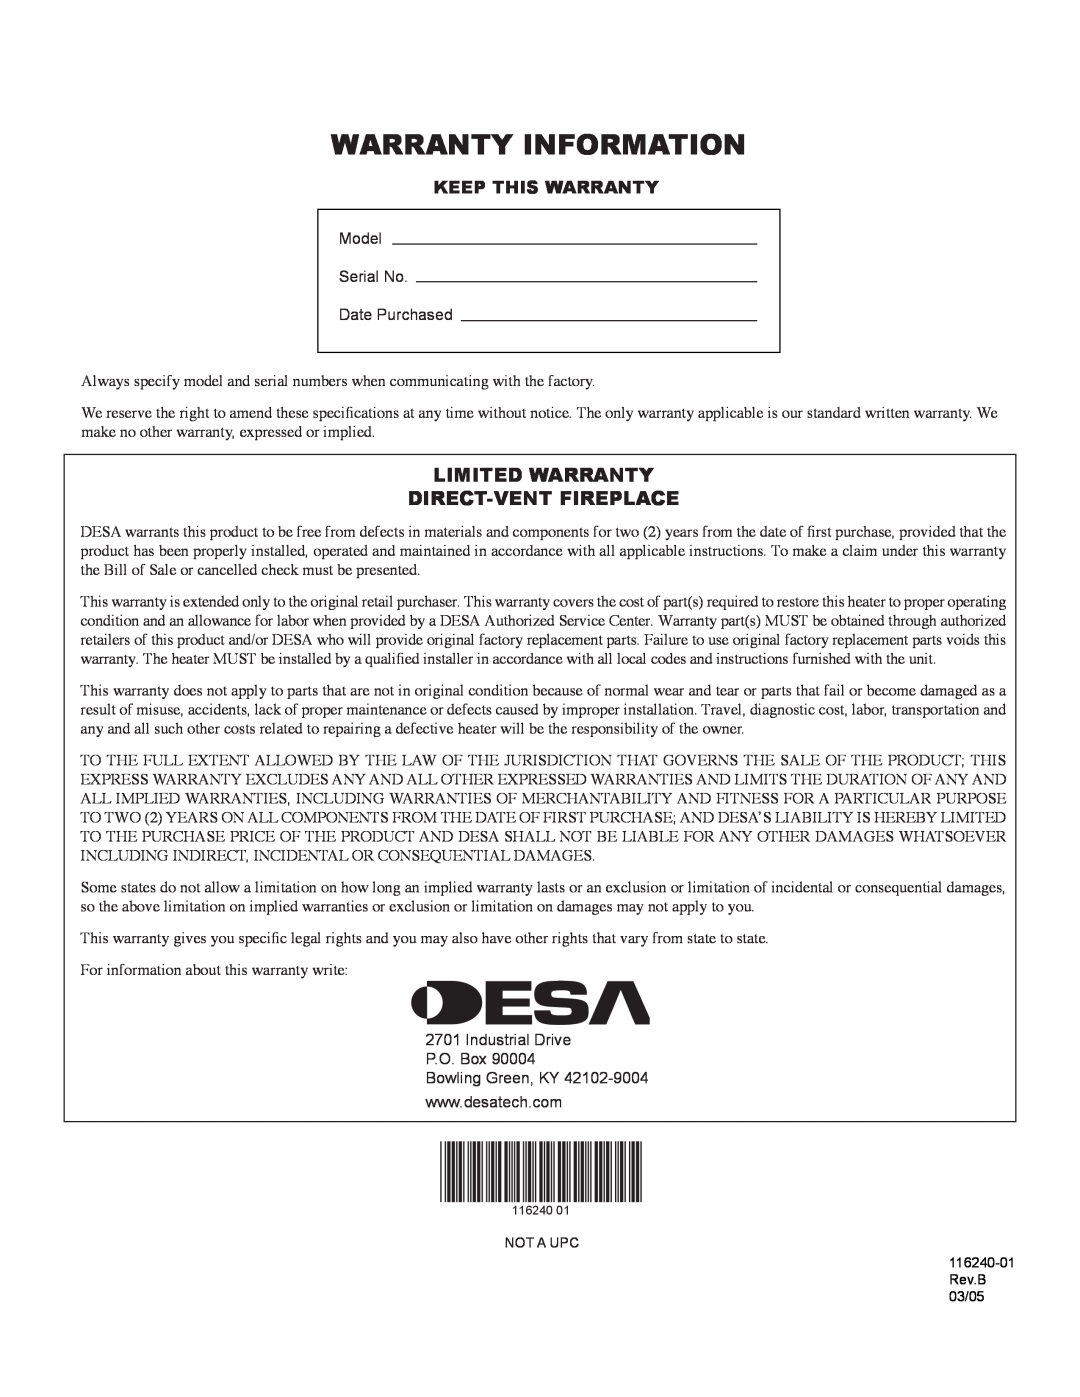 Desa (V)KC42NE SERIE installation manual Warranty Information, Limited Warranty Direct-Ventfireplace 